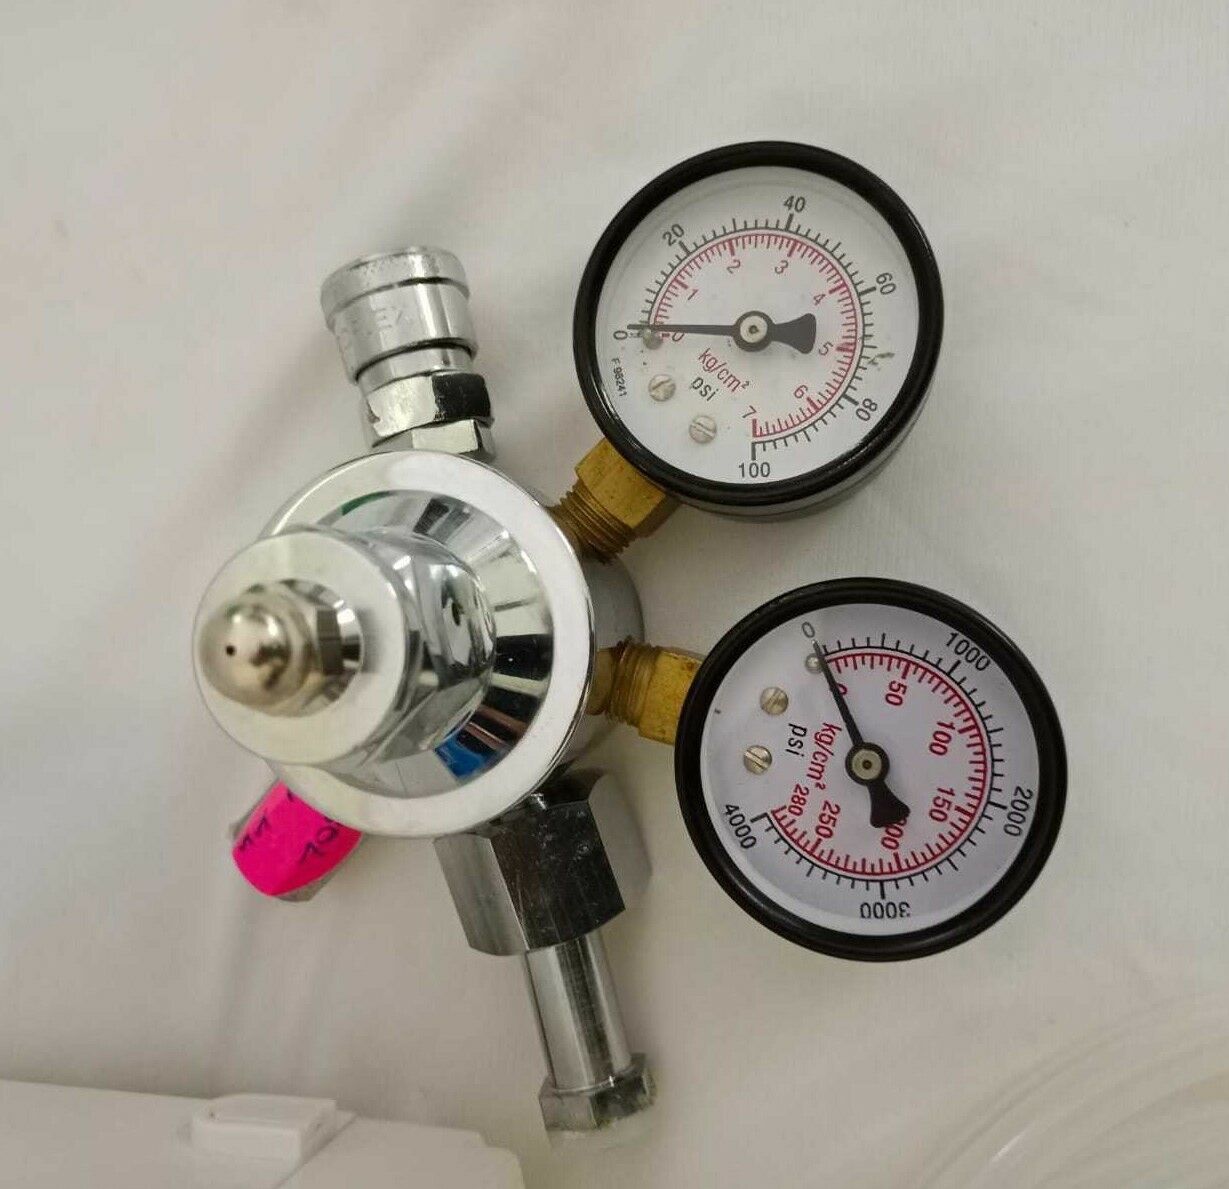 New Laparoscopic Co2 Insufflators High Pressure Regulator Accessories Instrument